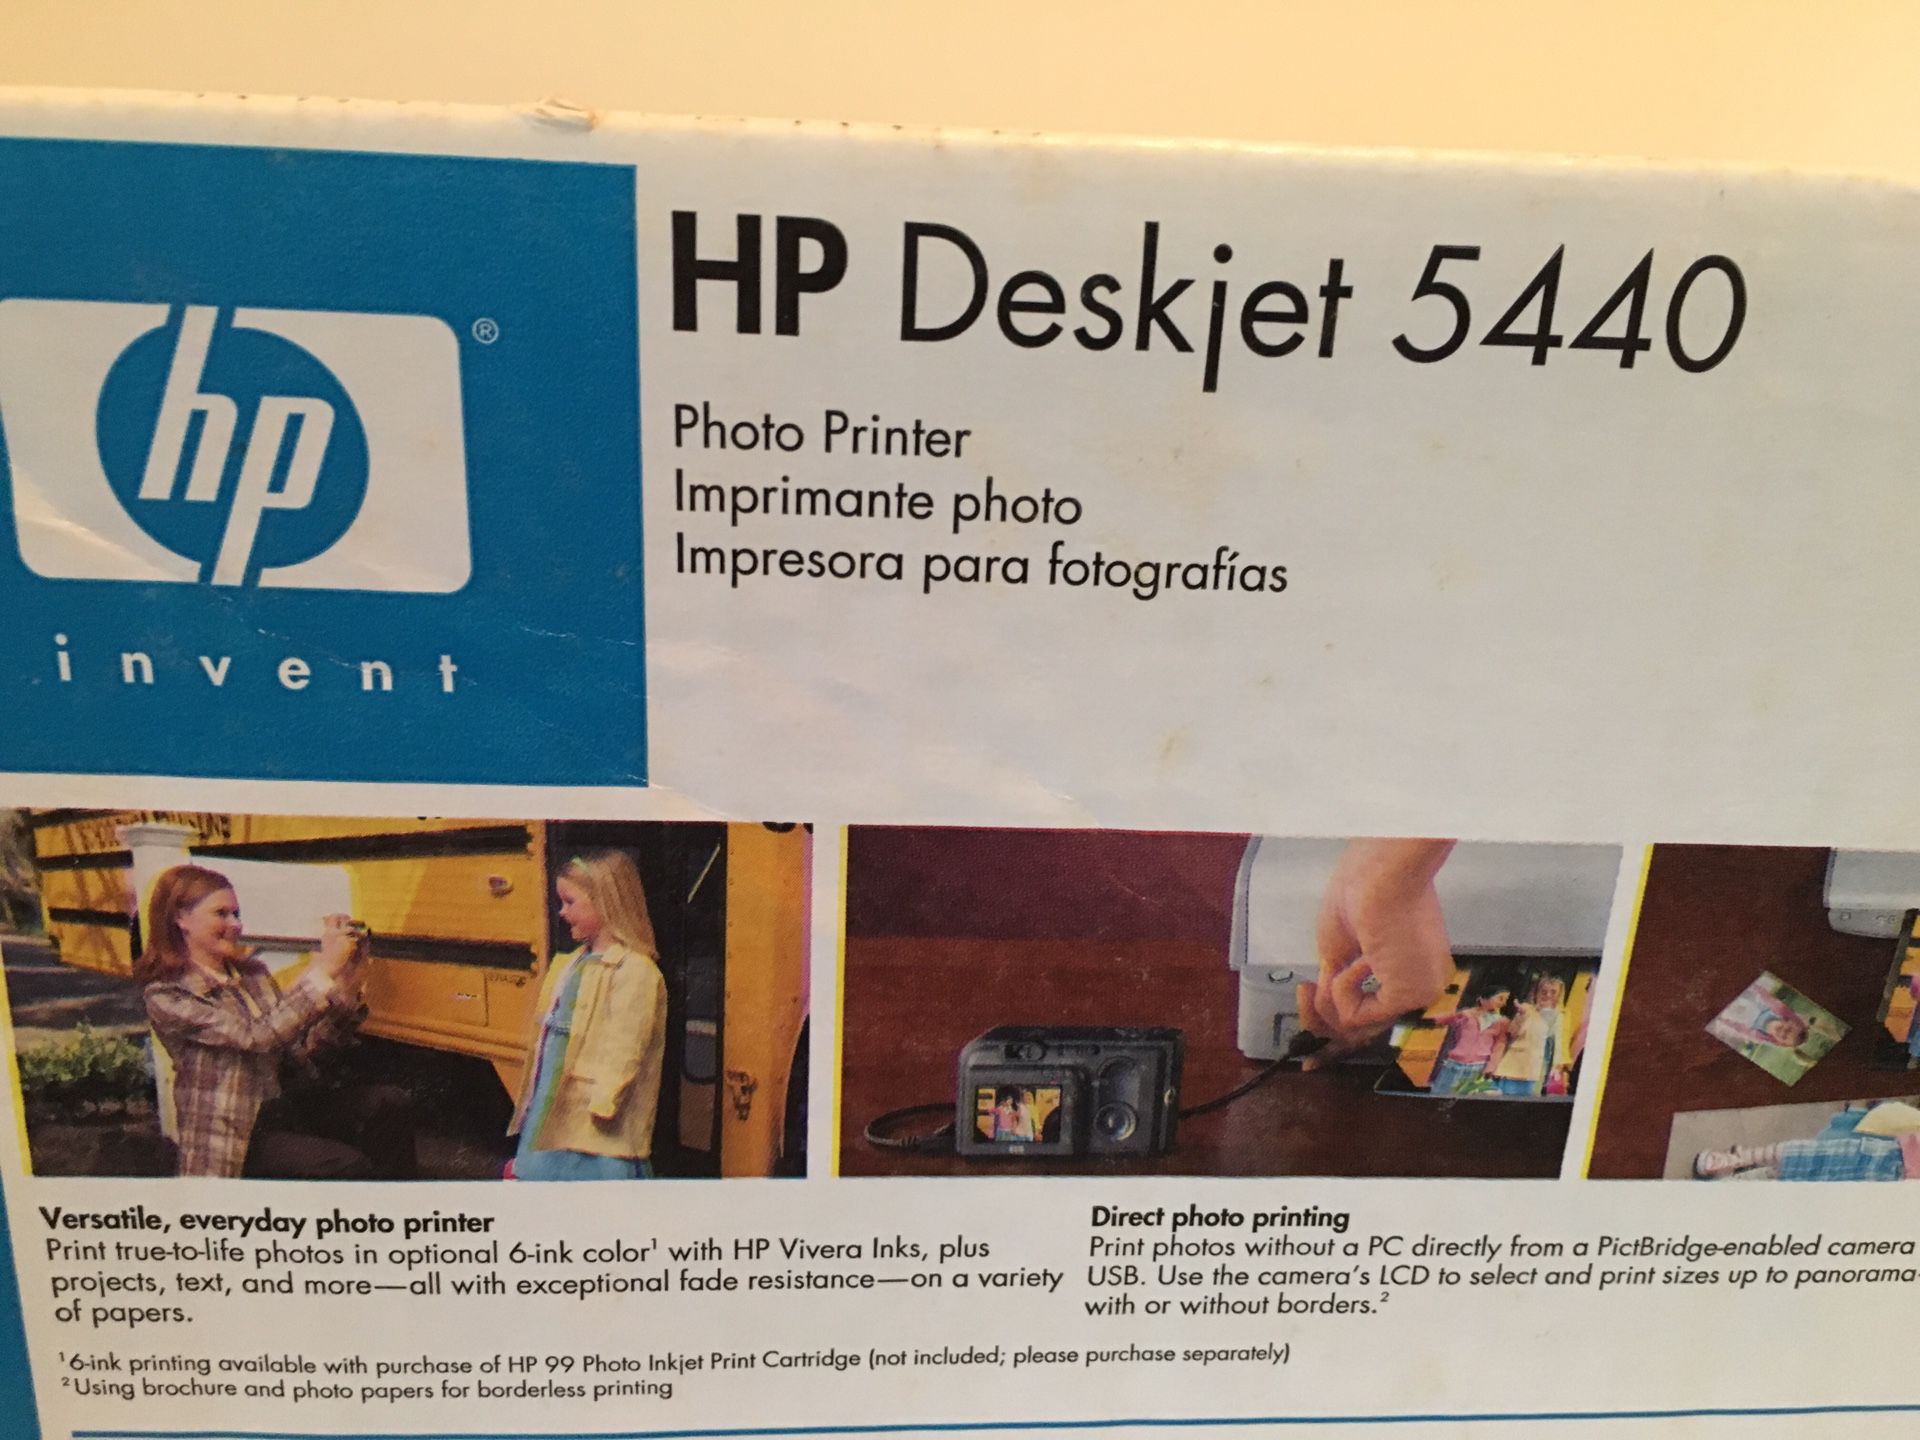 HP DeskJet 5440 Printer hp5440 photo Printer